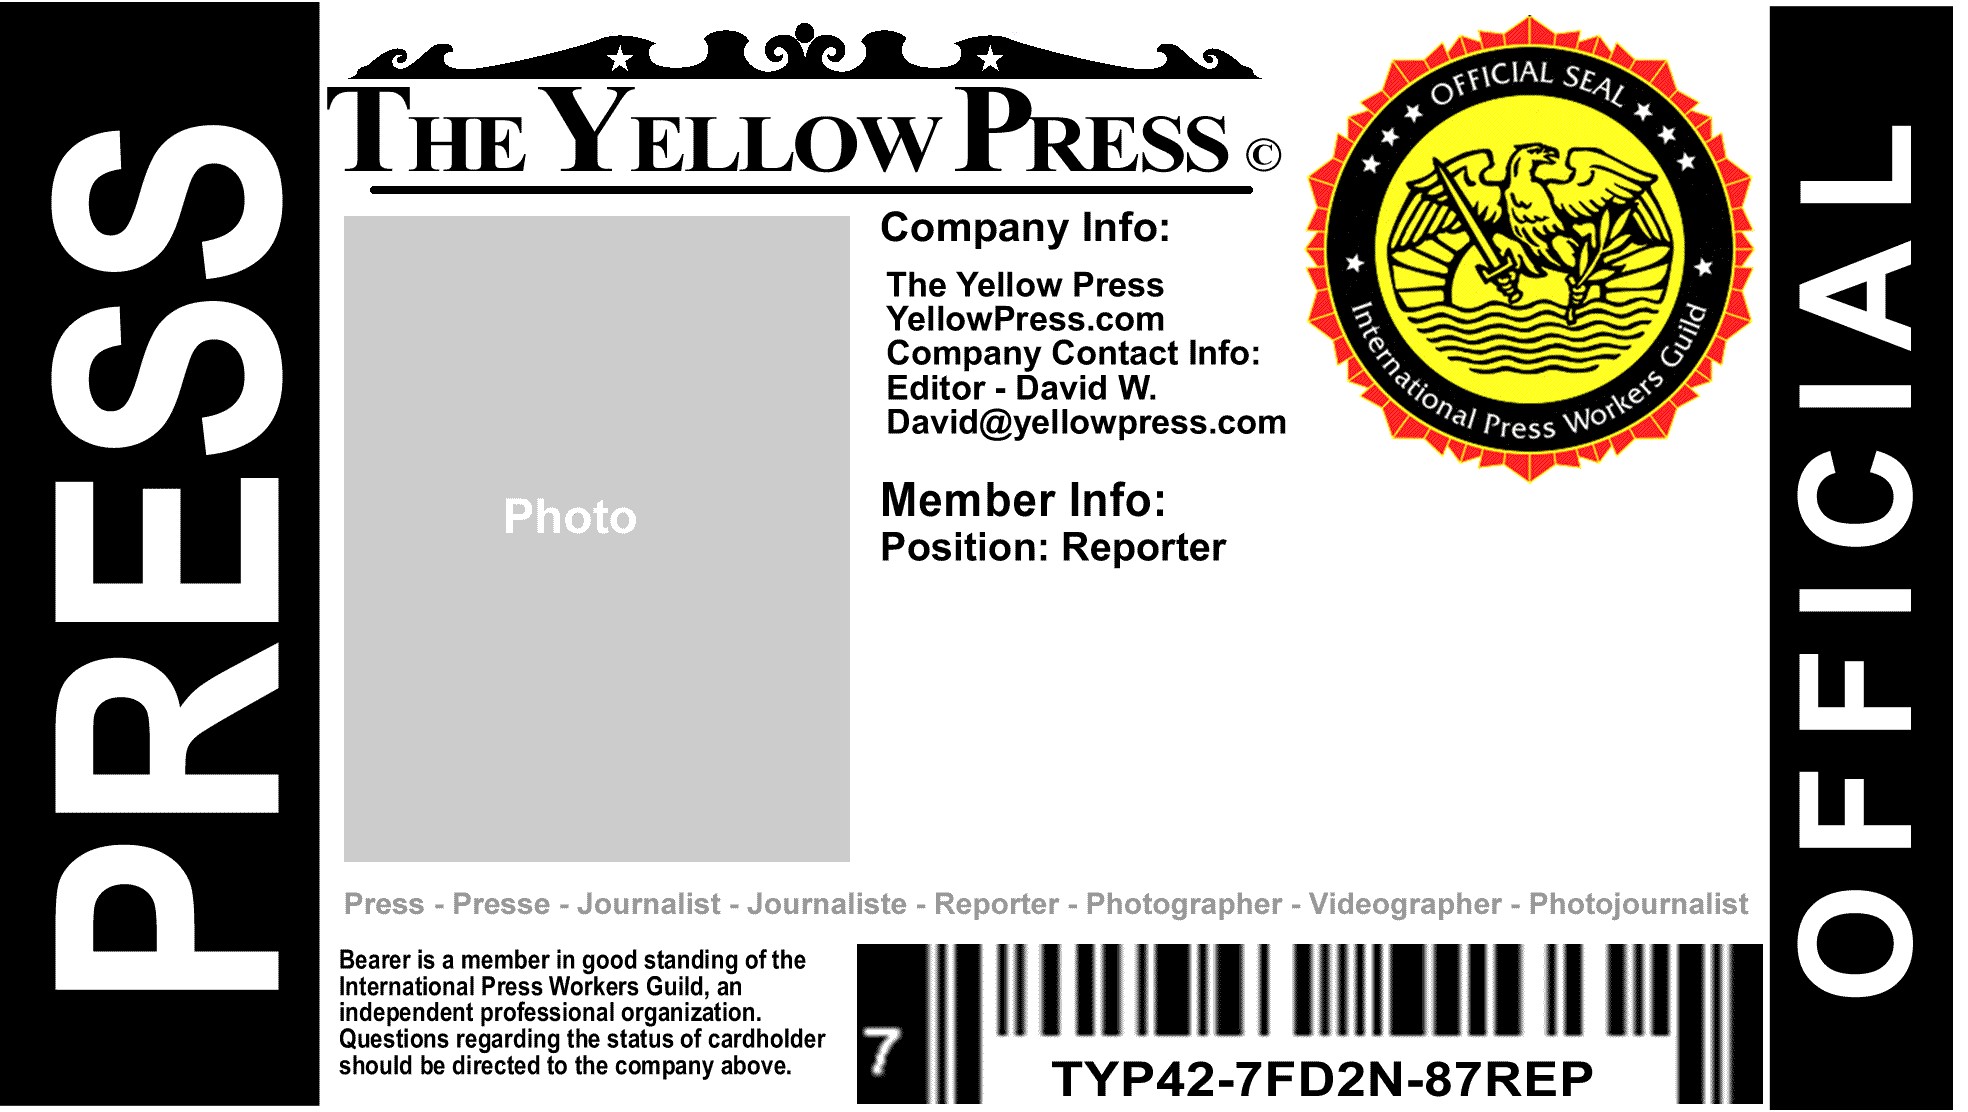 Free Press Pass The Yellow Document Passes